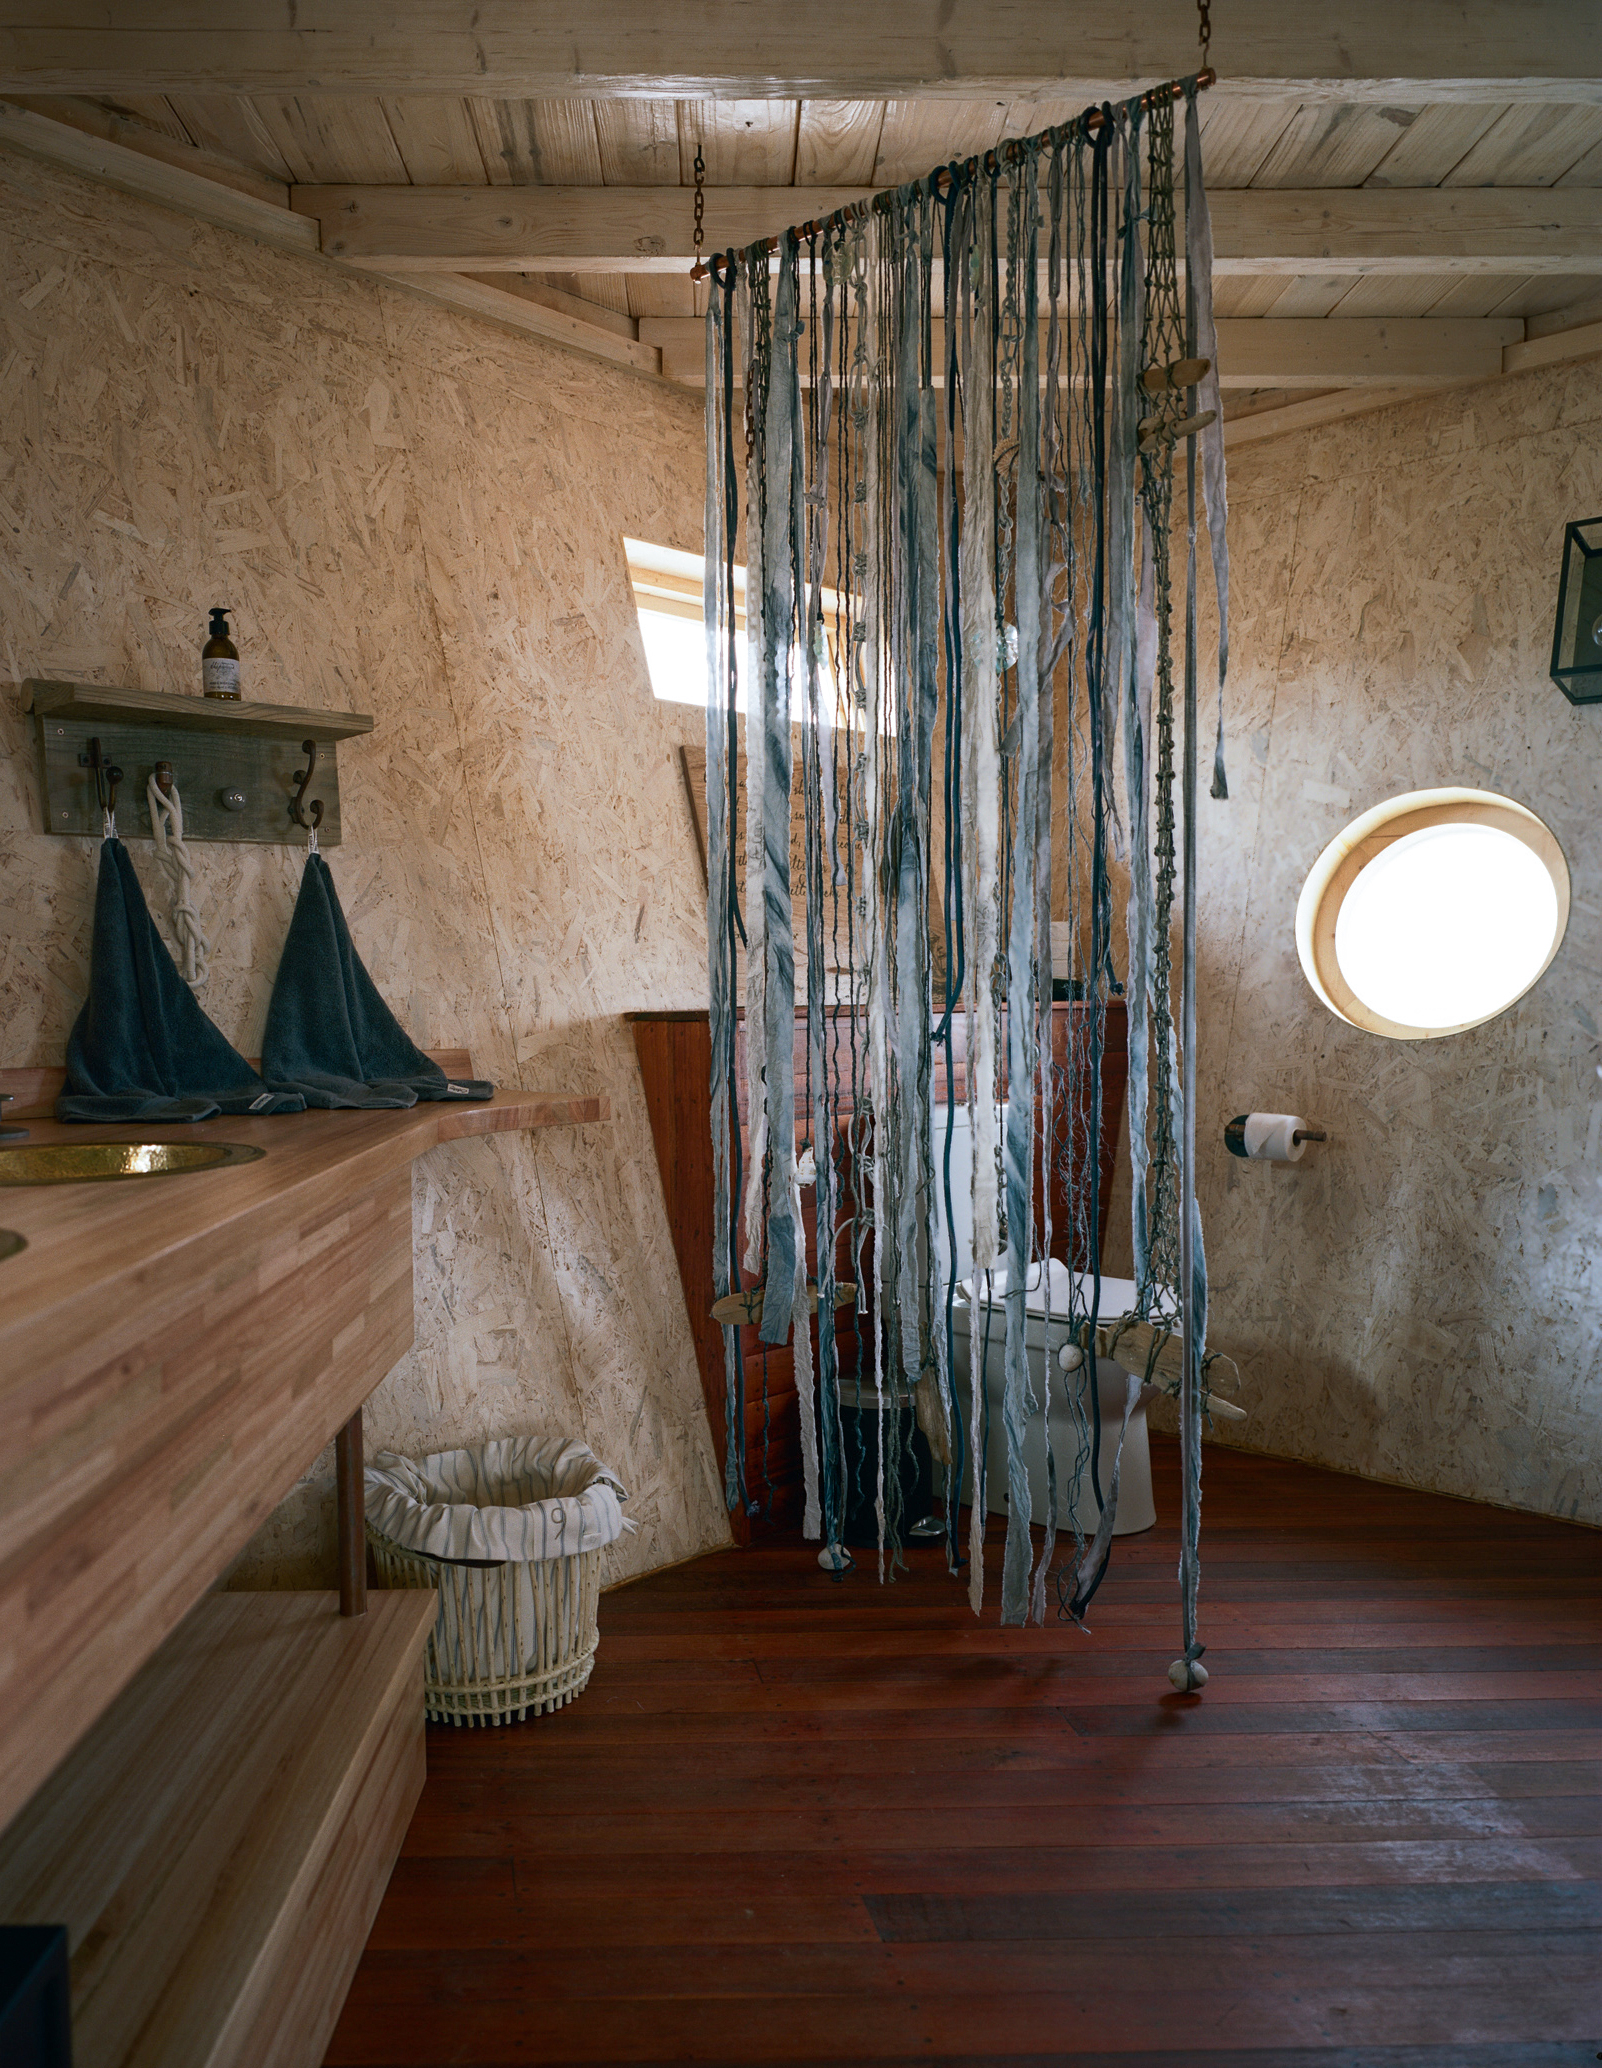 Shipwreck Lodge - Accommodation - Bathroom & loo & sinks.jpg